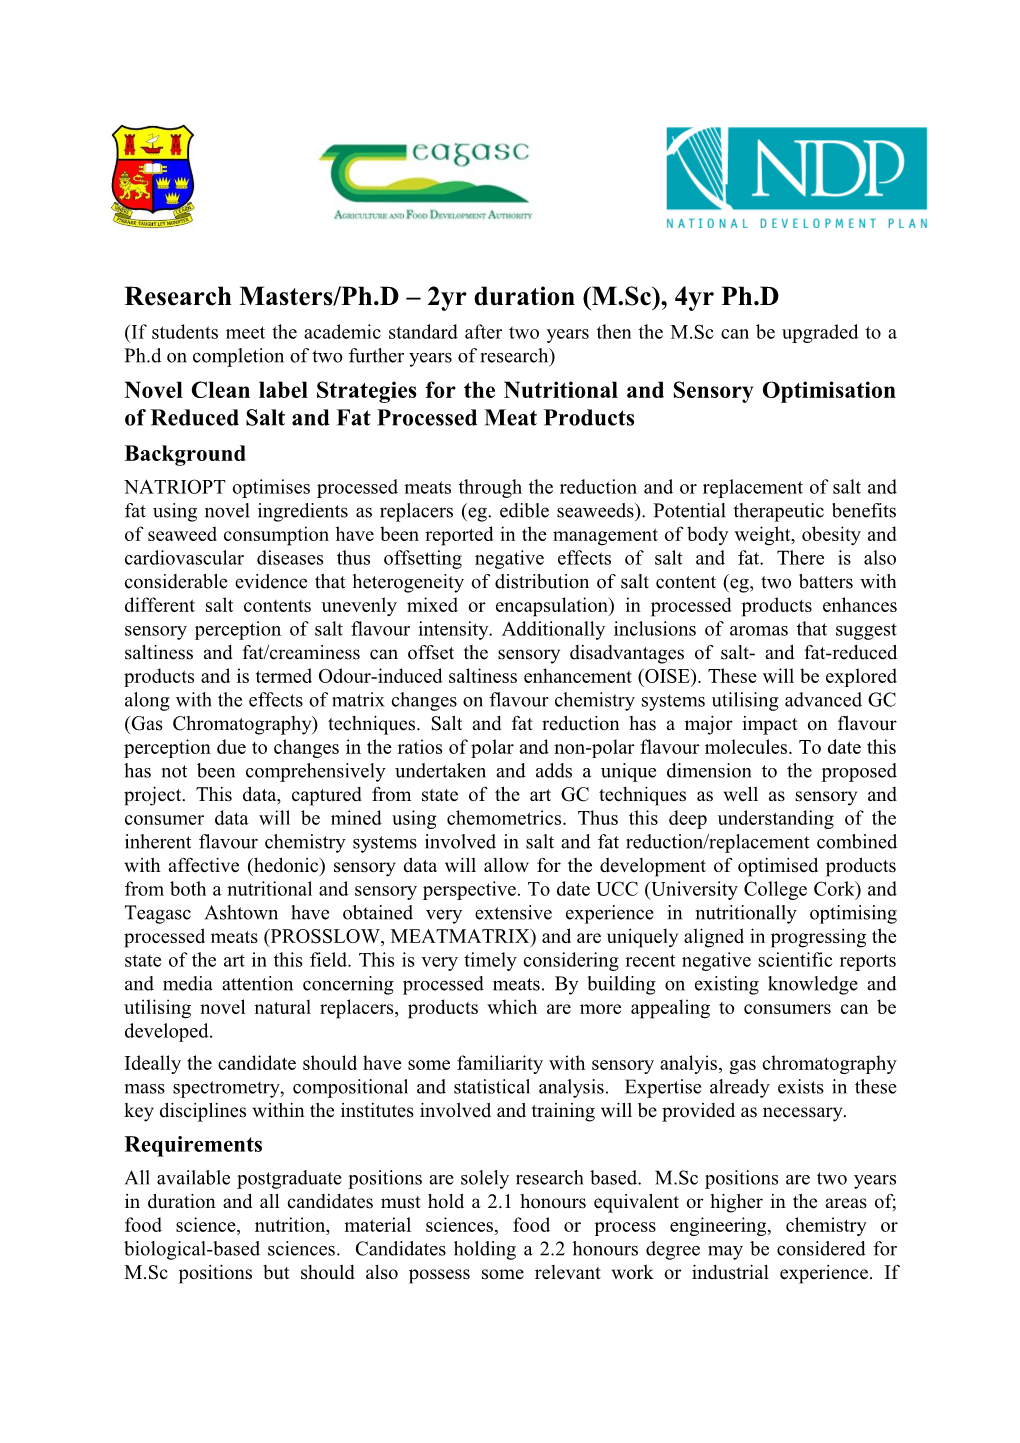 Research Masters/Ph.D 2Yr Duration (M.Sc), 4Yr Ph.D